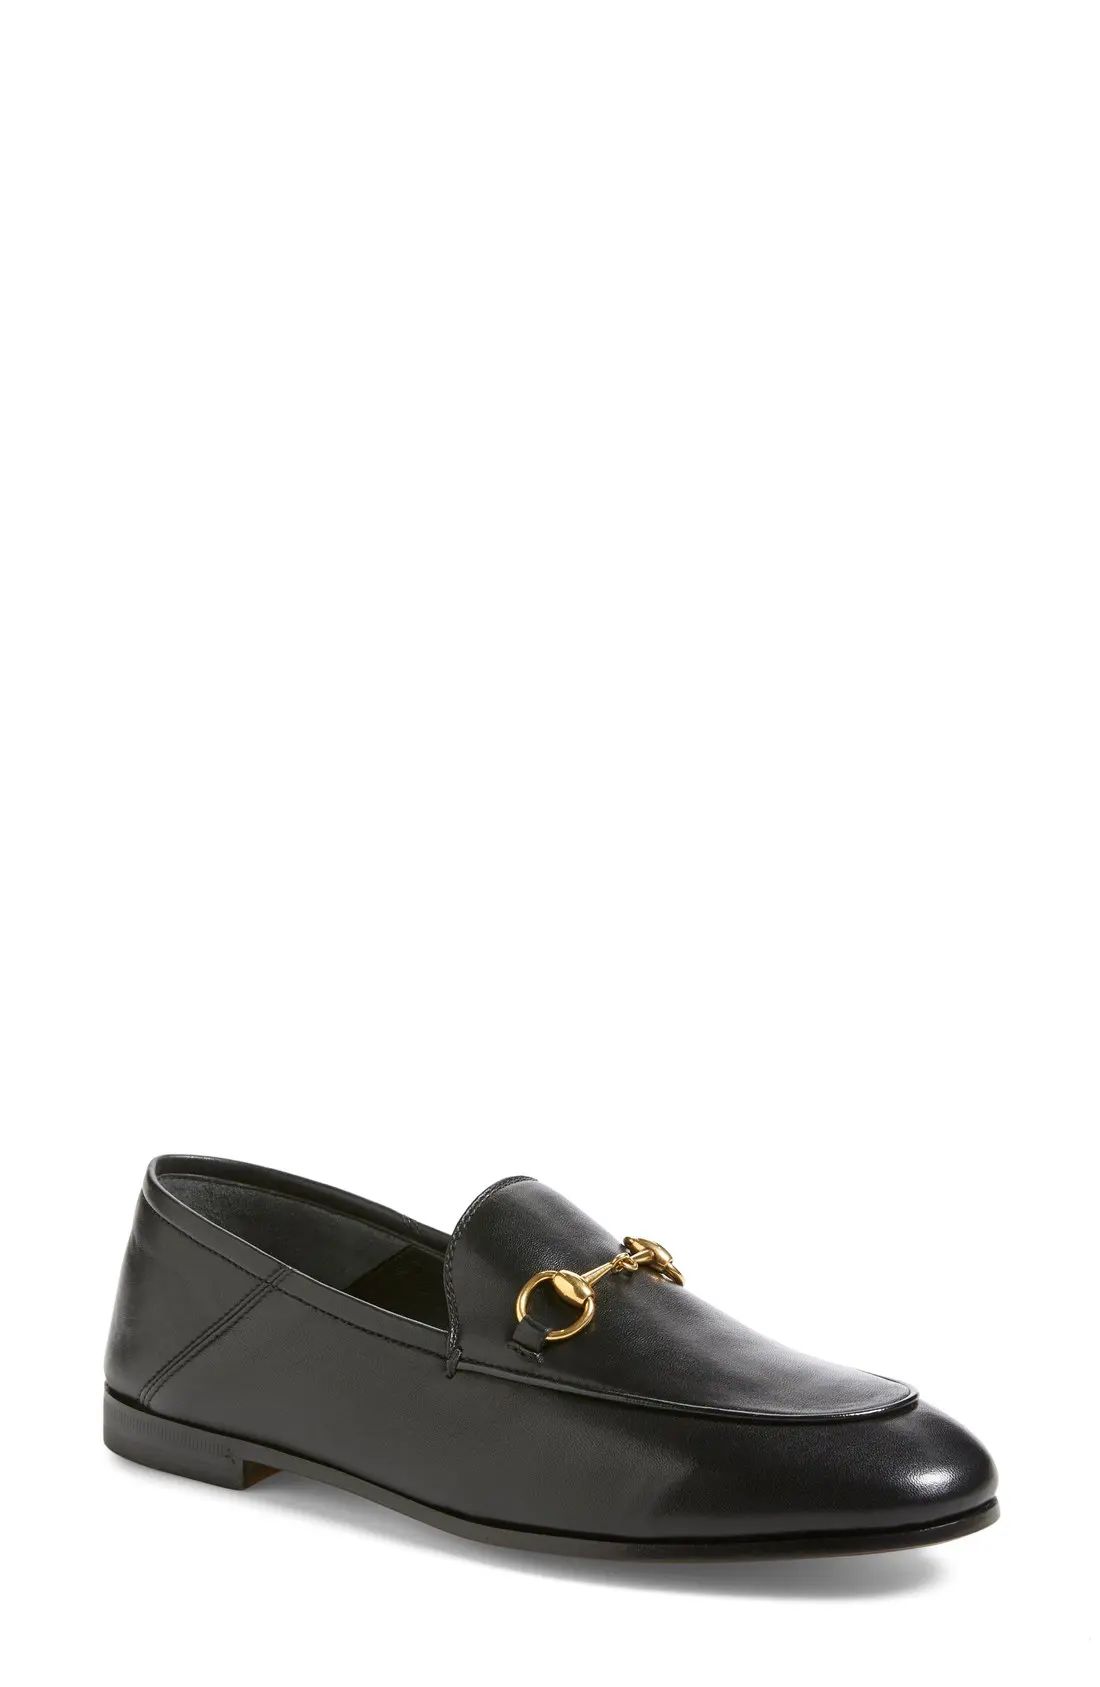 Women's Gucci Brixton Convertible Loafer, Size 4US / 34EU - Black | Nordstrom